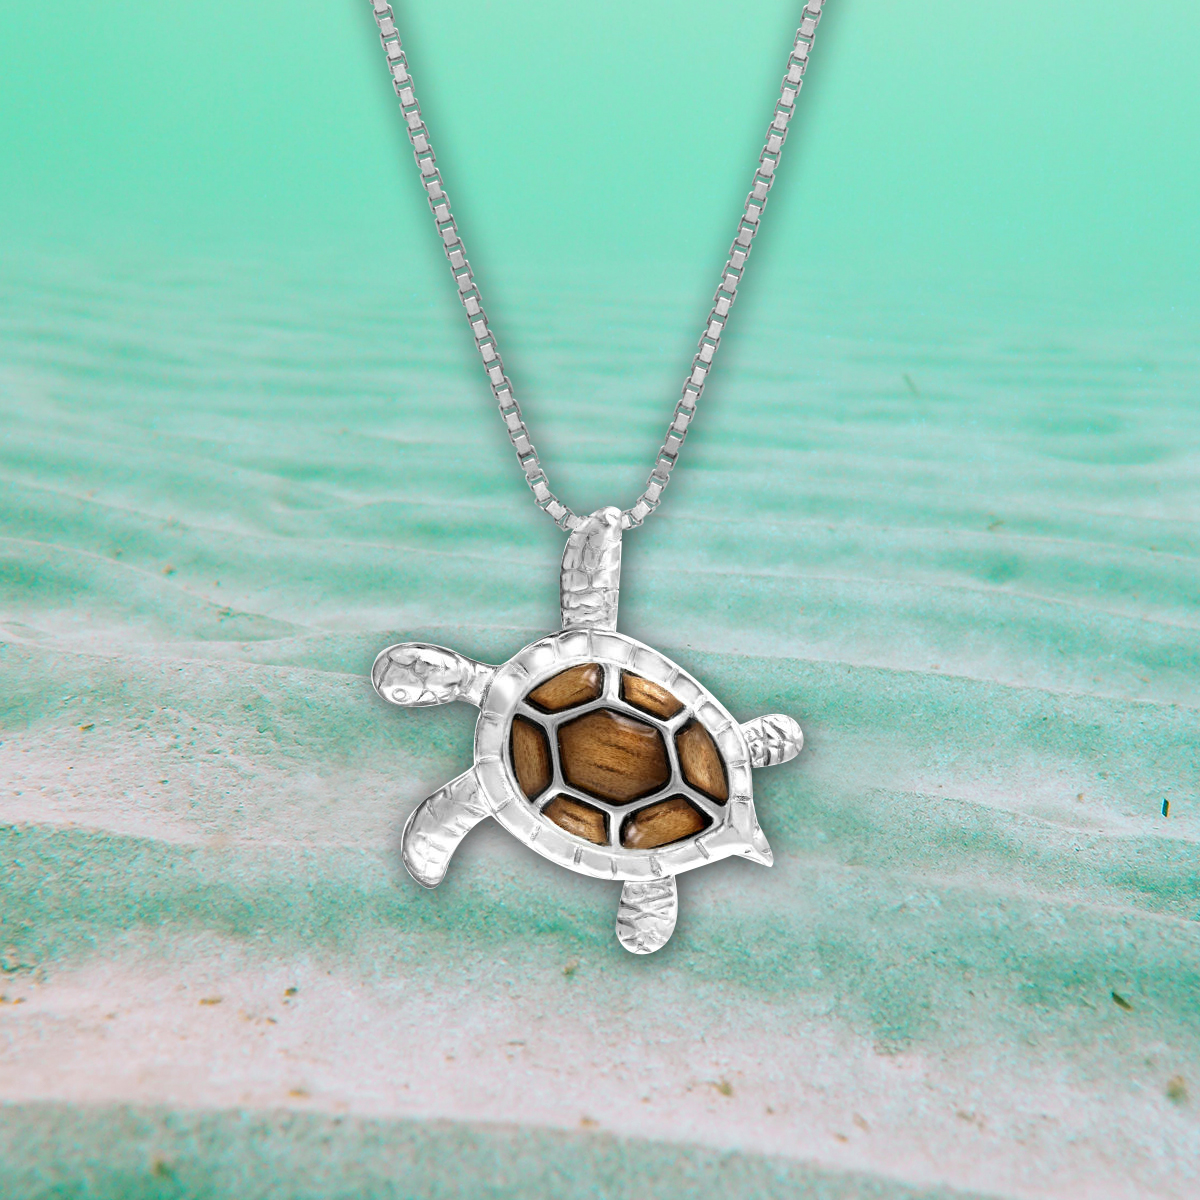 Honolulu Jewelry Company Sterling Silver Koa Wood Turtle Necklace Pendant with Box Chain